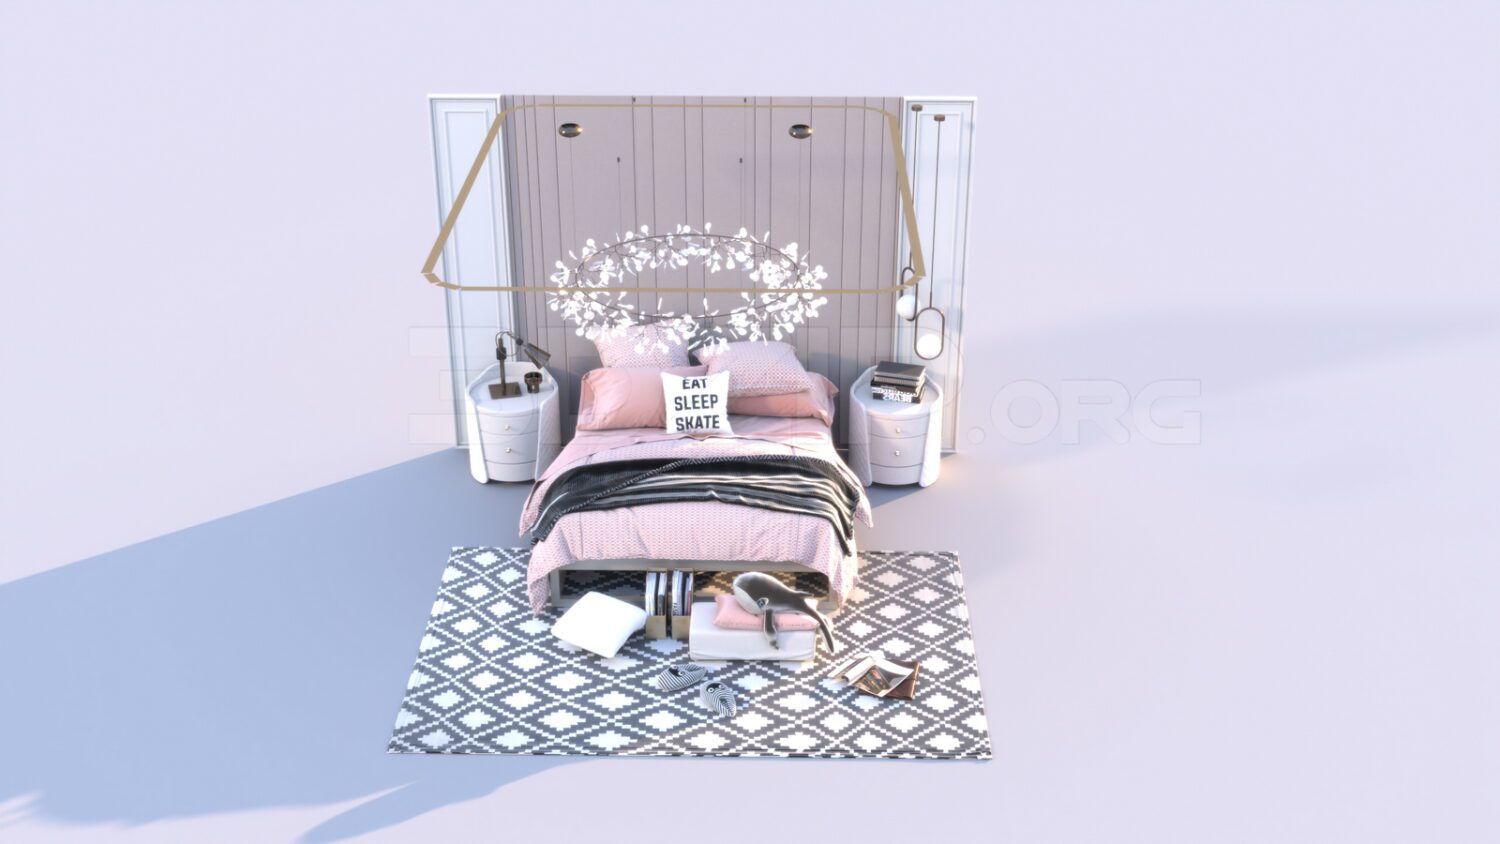 3583. Free 3D Bed Model Download